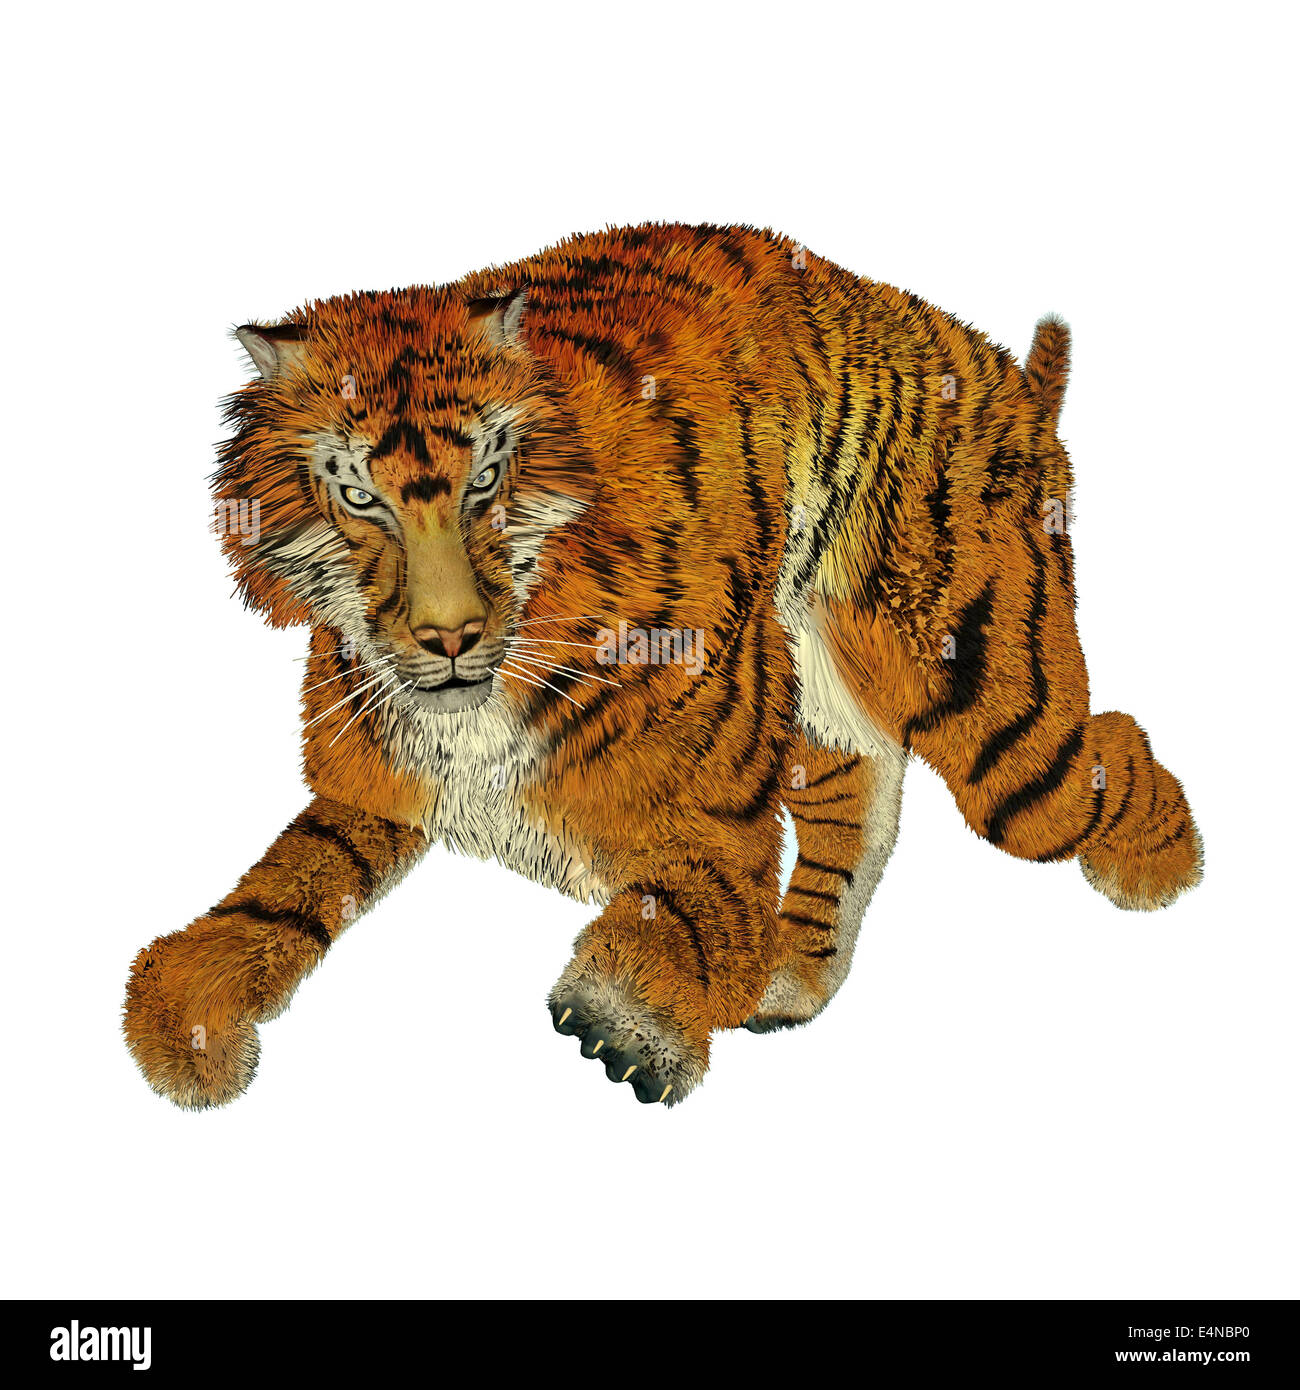 Tiger running Stock Photo